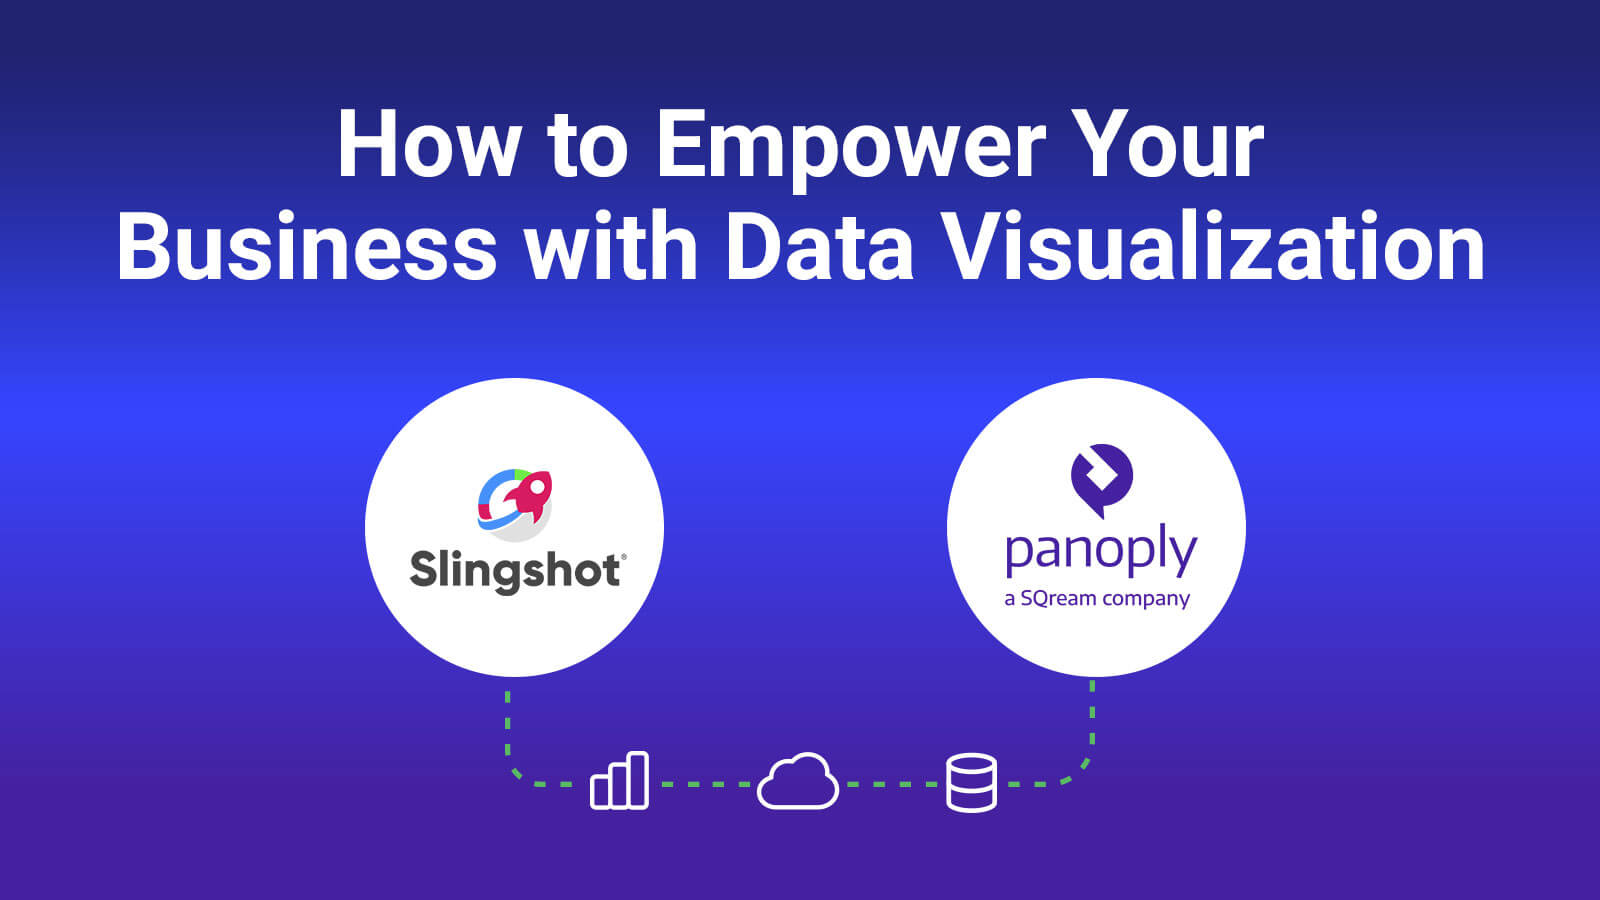 Slingshotと Panoply がビジネス データ分析を強化